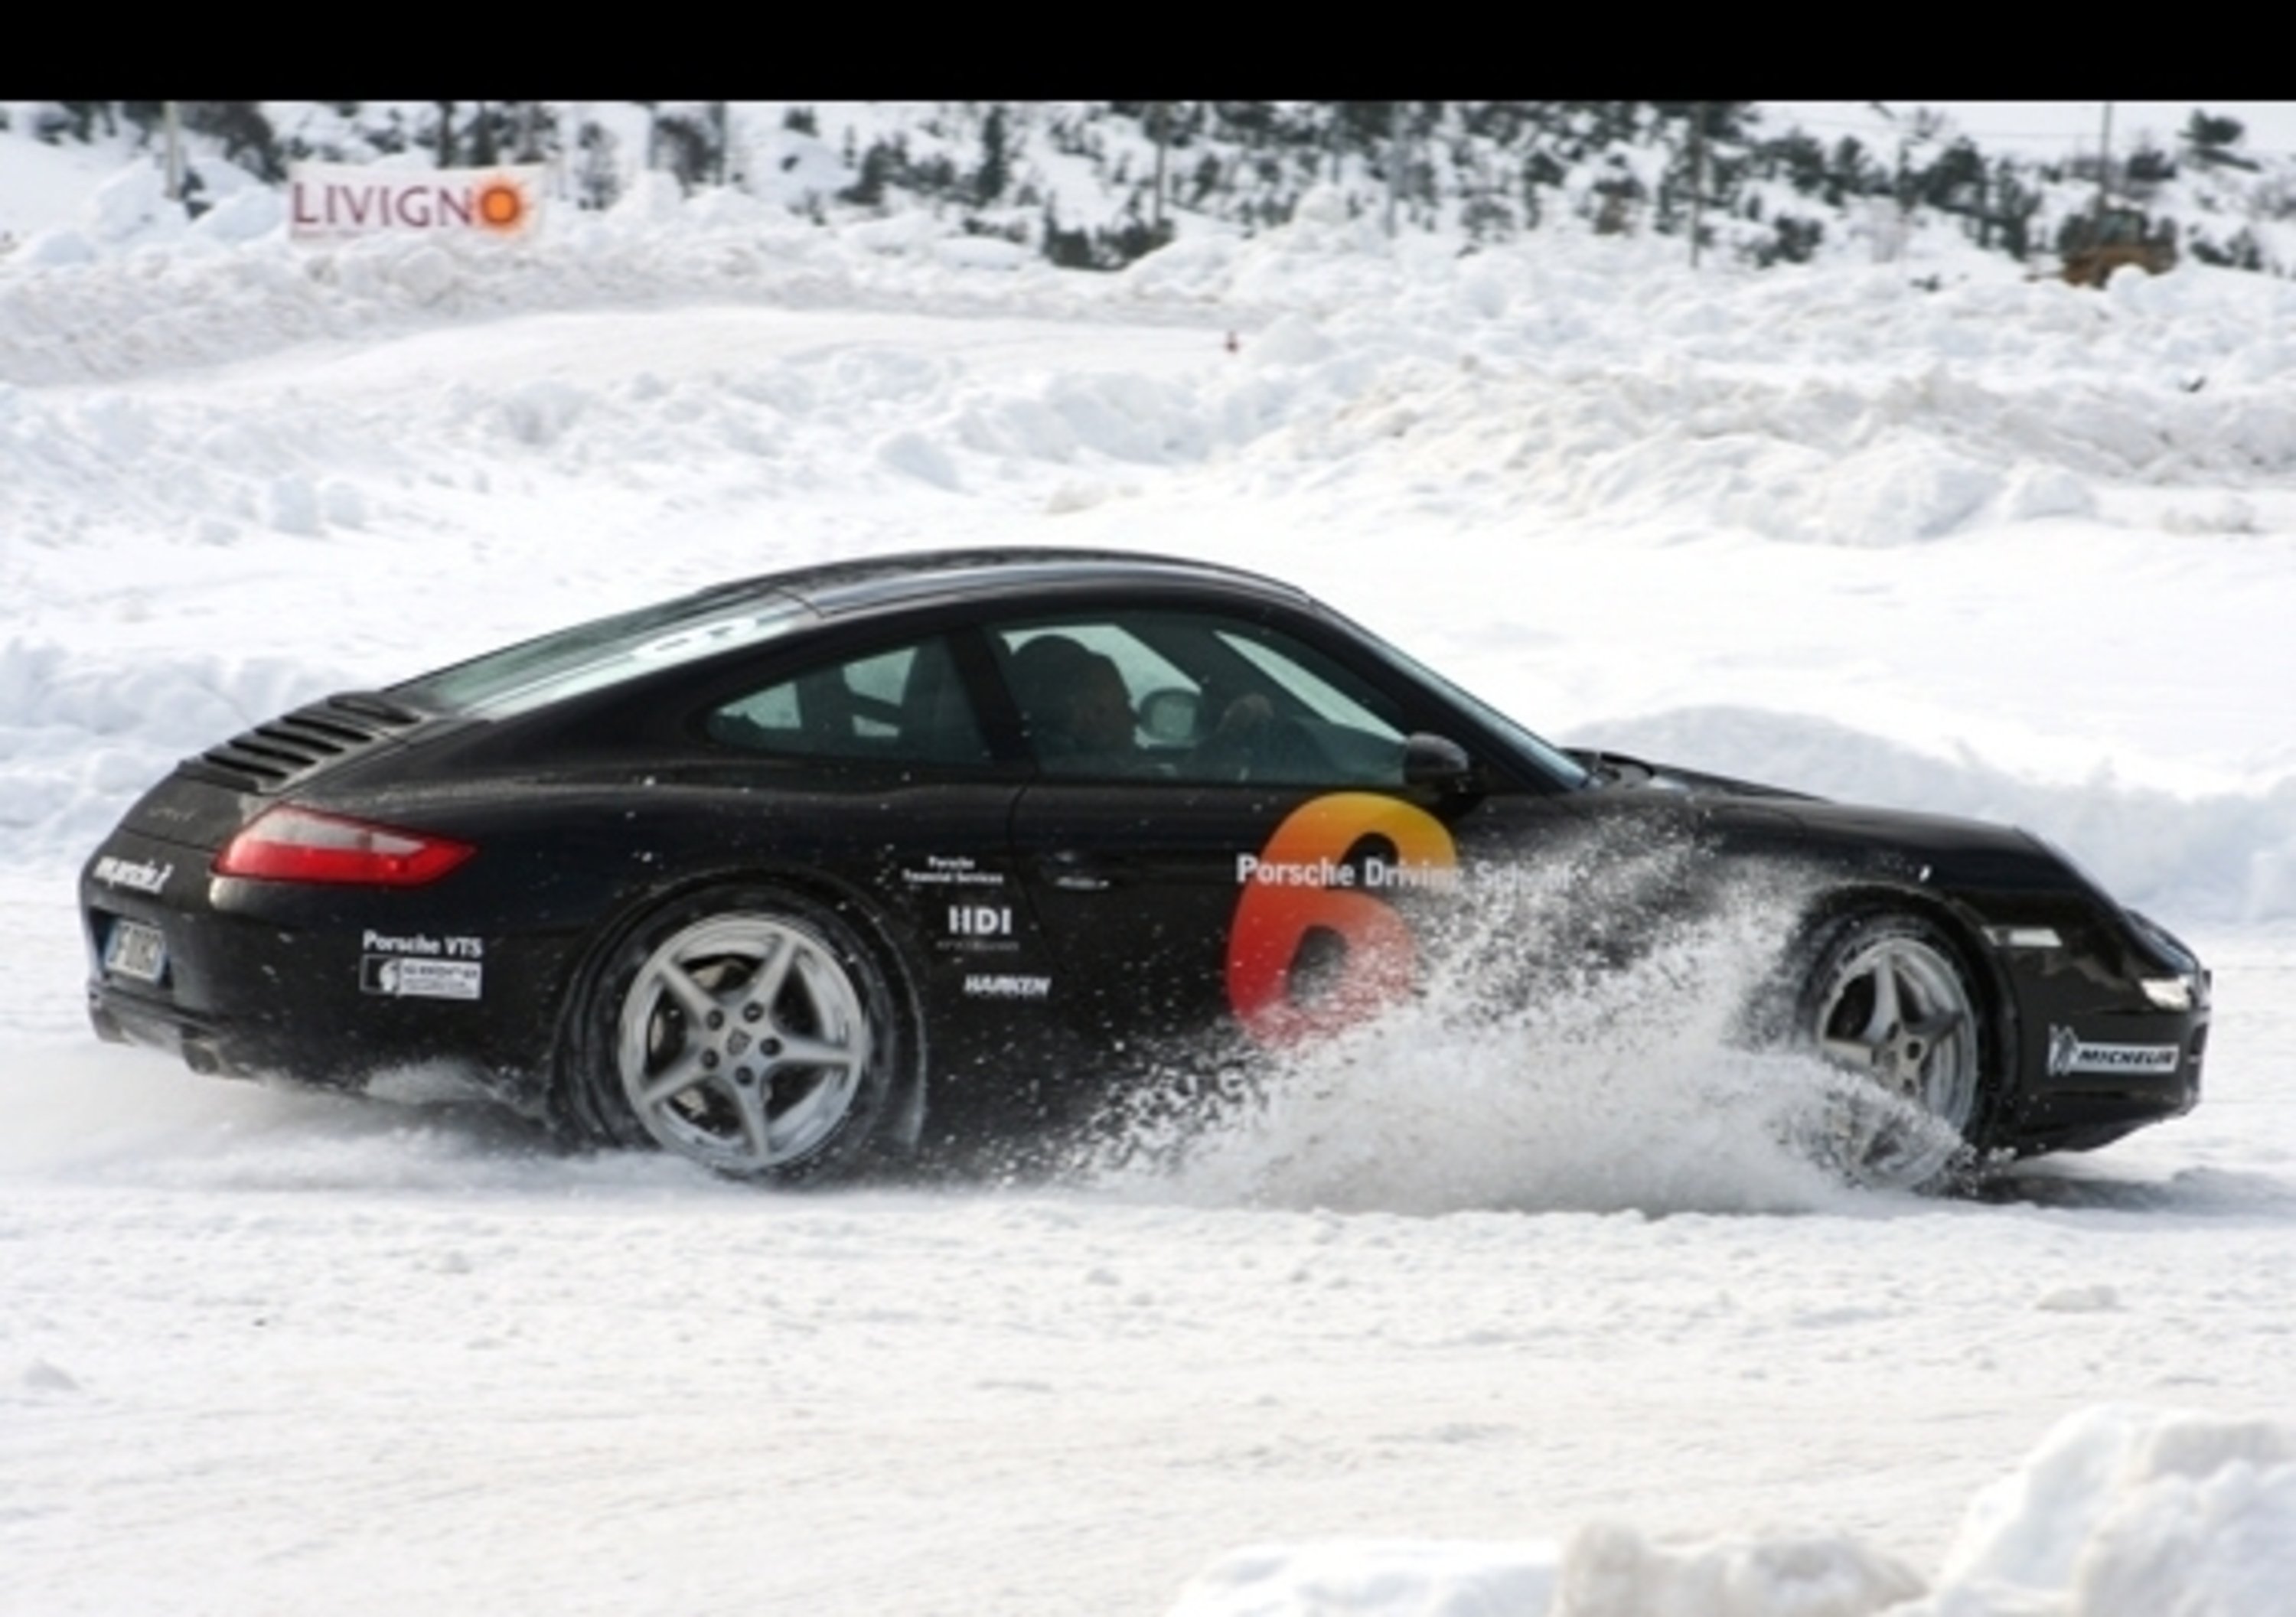 Porsche Driving School